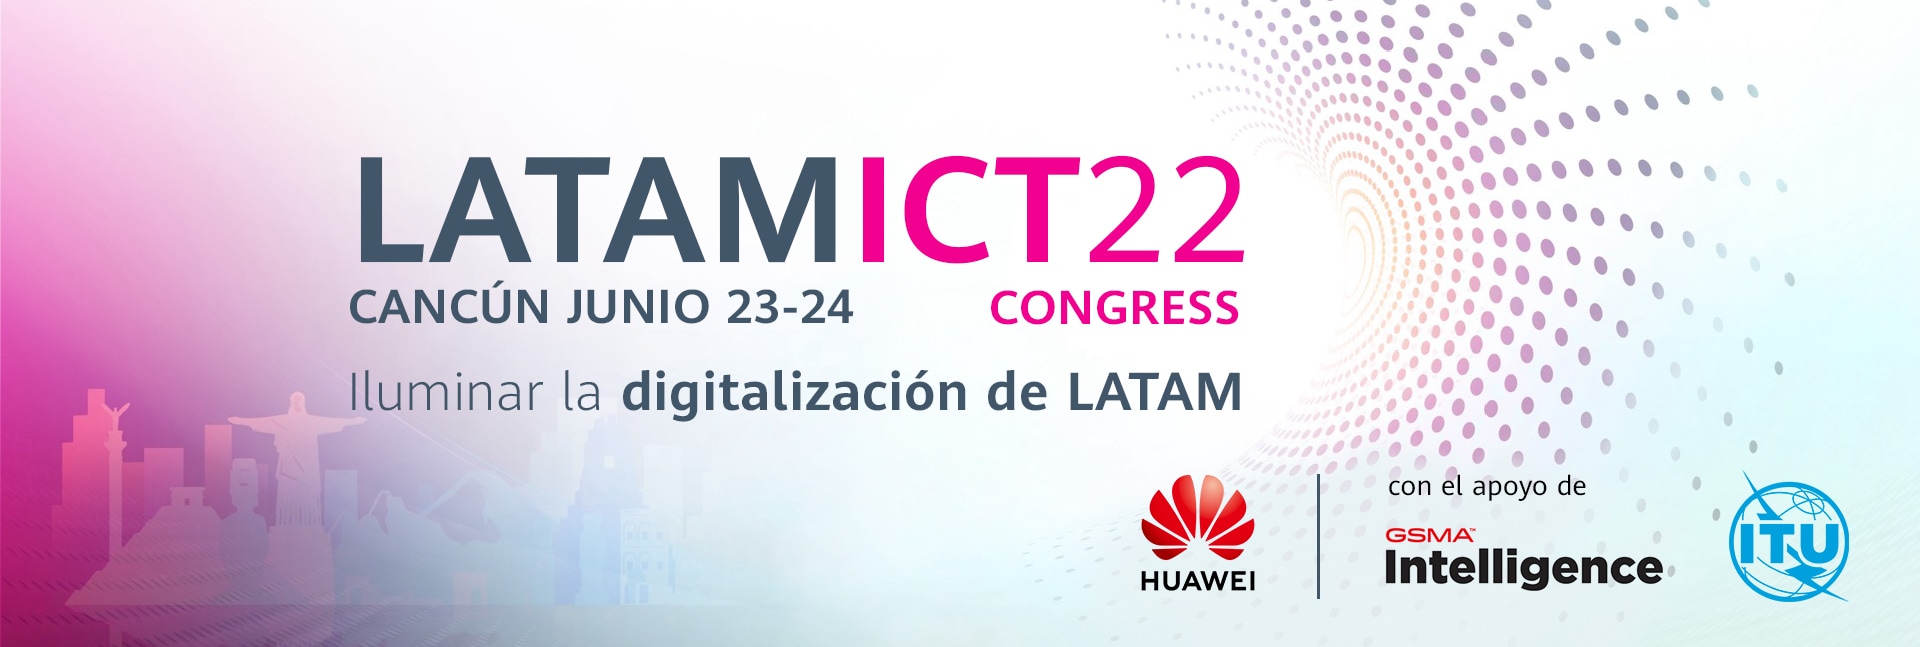 LATAM ICT22 Cancun 1920x647